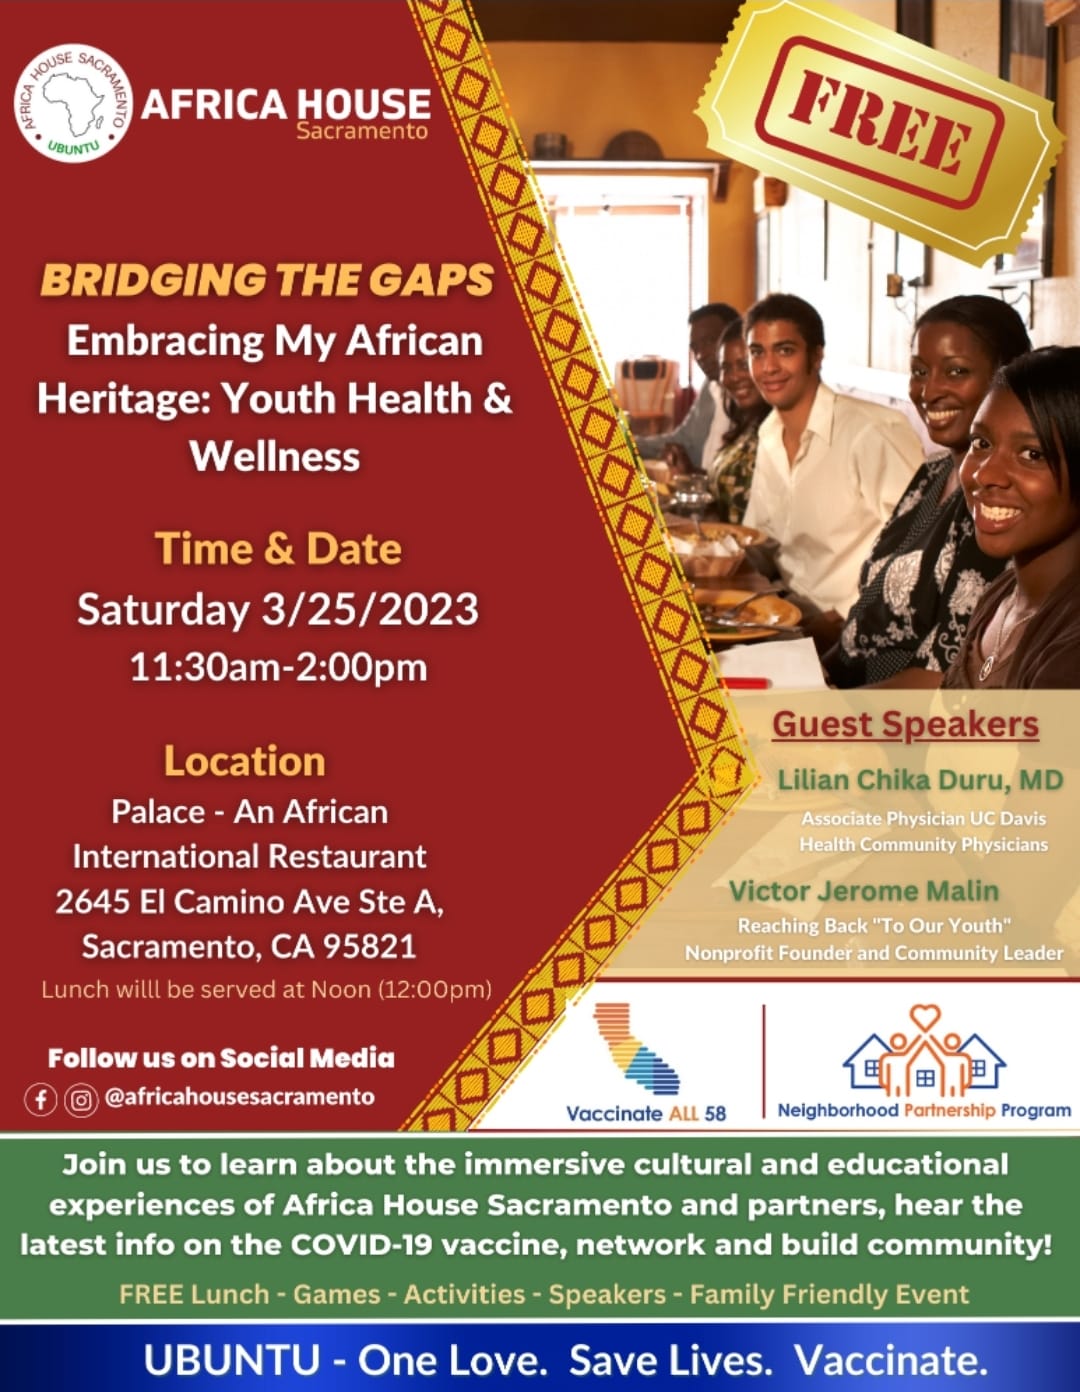 Bridging the Gap flyer, March 25, 2023